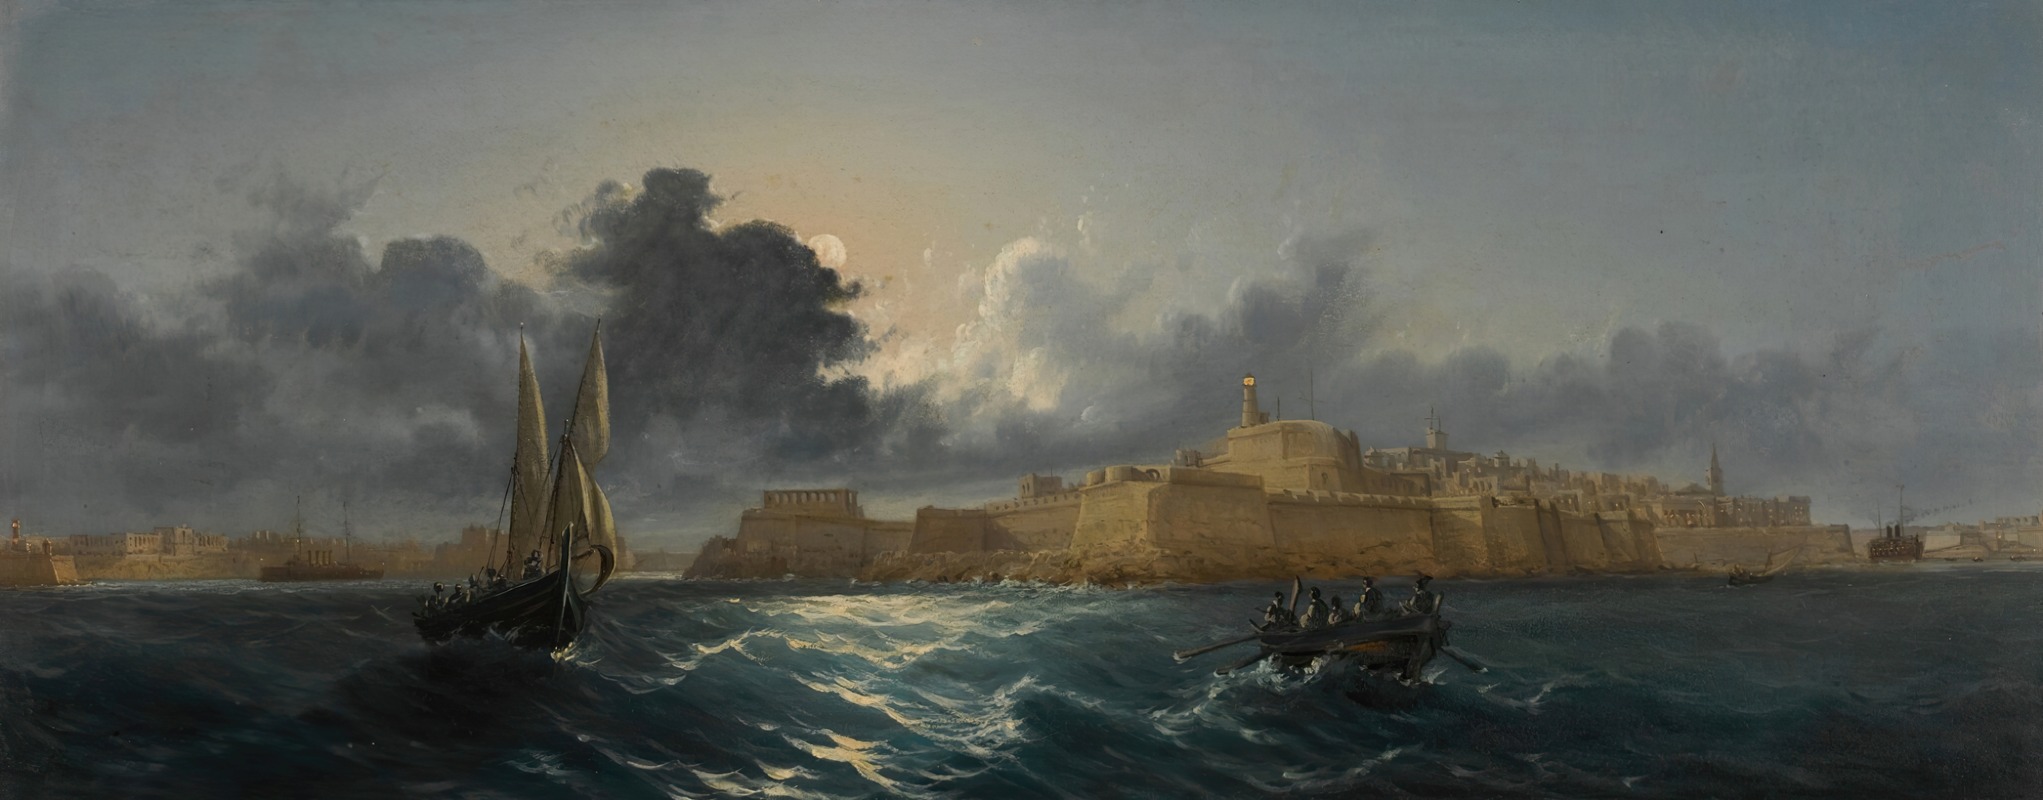 Luigi Galea - View of Fort Ricasoli, Malta